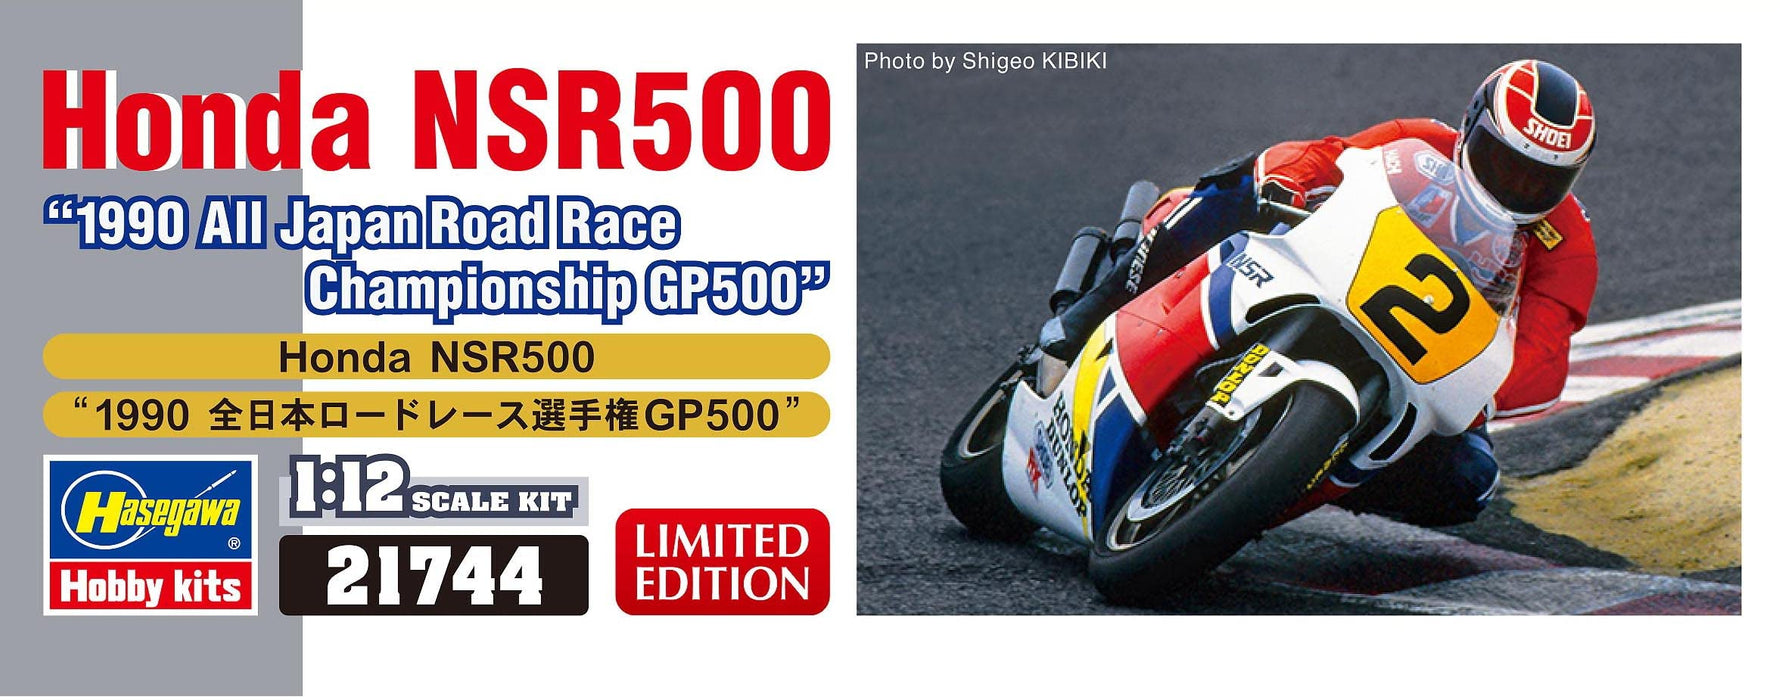 HASEGAWA 1/12 Honda NSR500 1990 All Japan Road Race Championship Kunststoffmodell